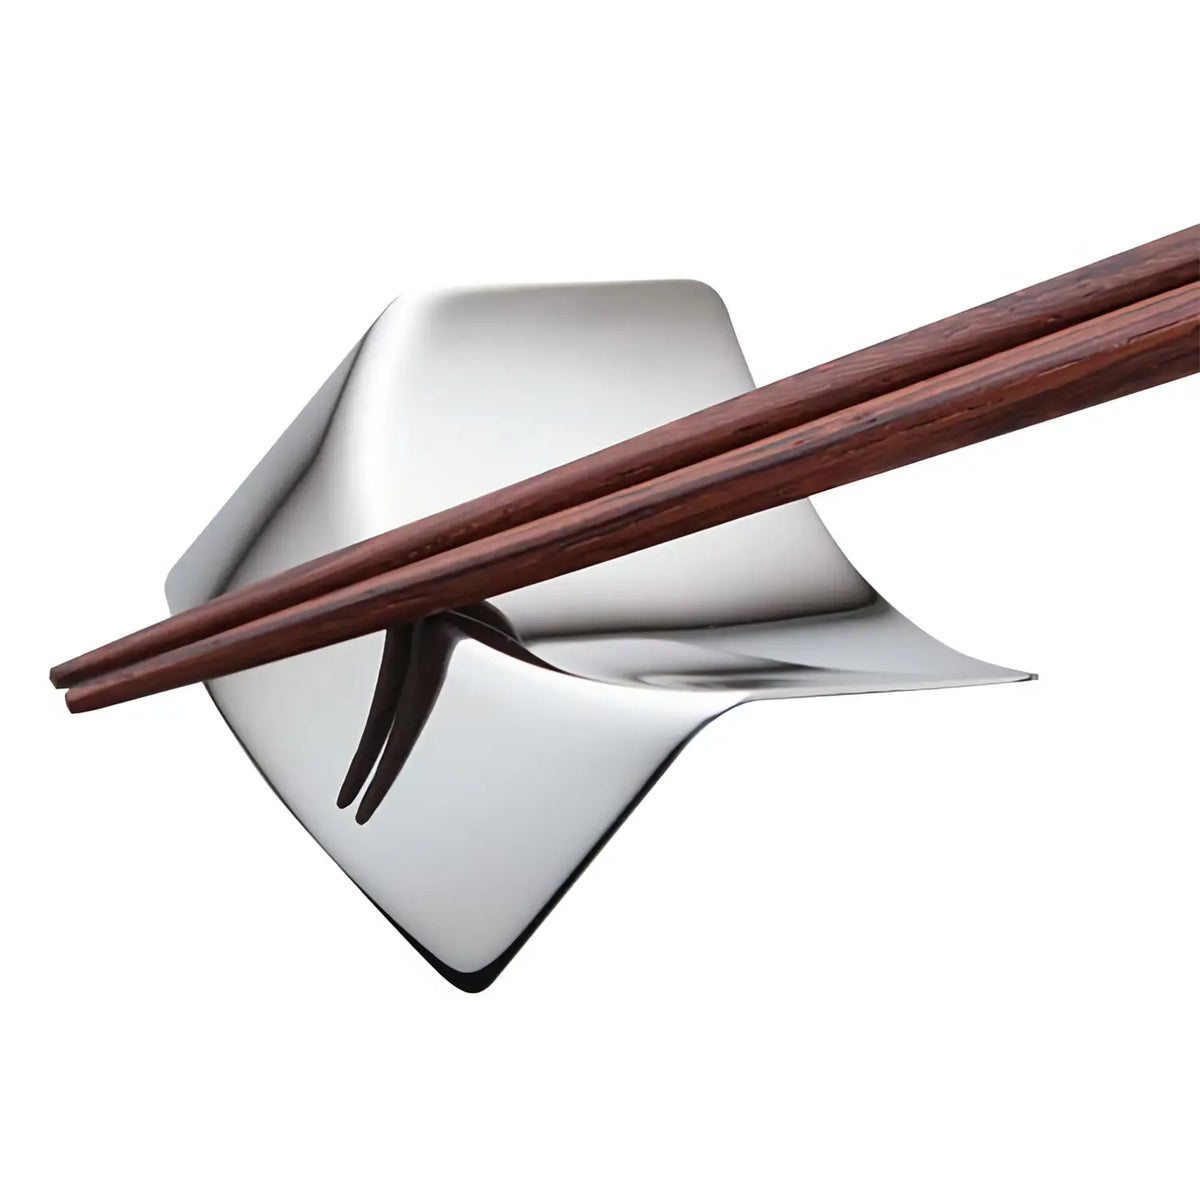 LUCKYWOOD ORI Stainless Steel Chopstick Rest